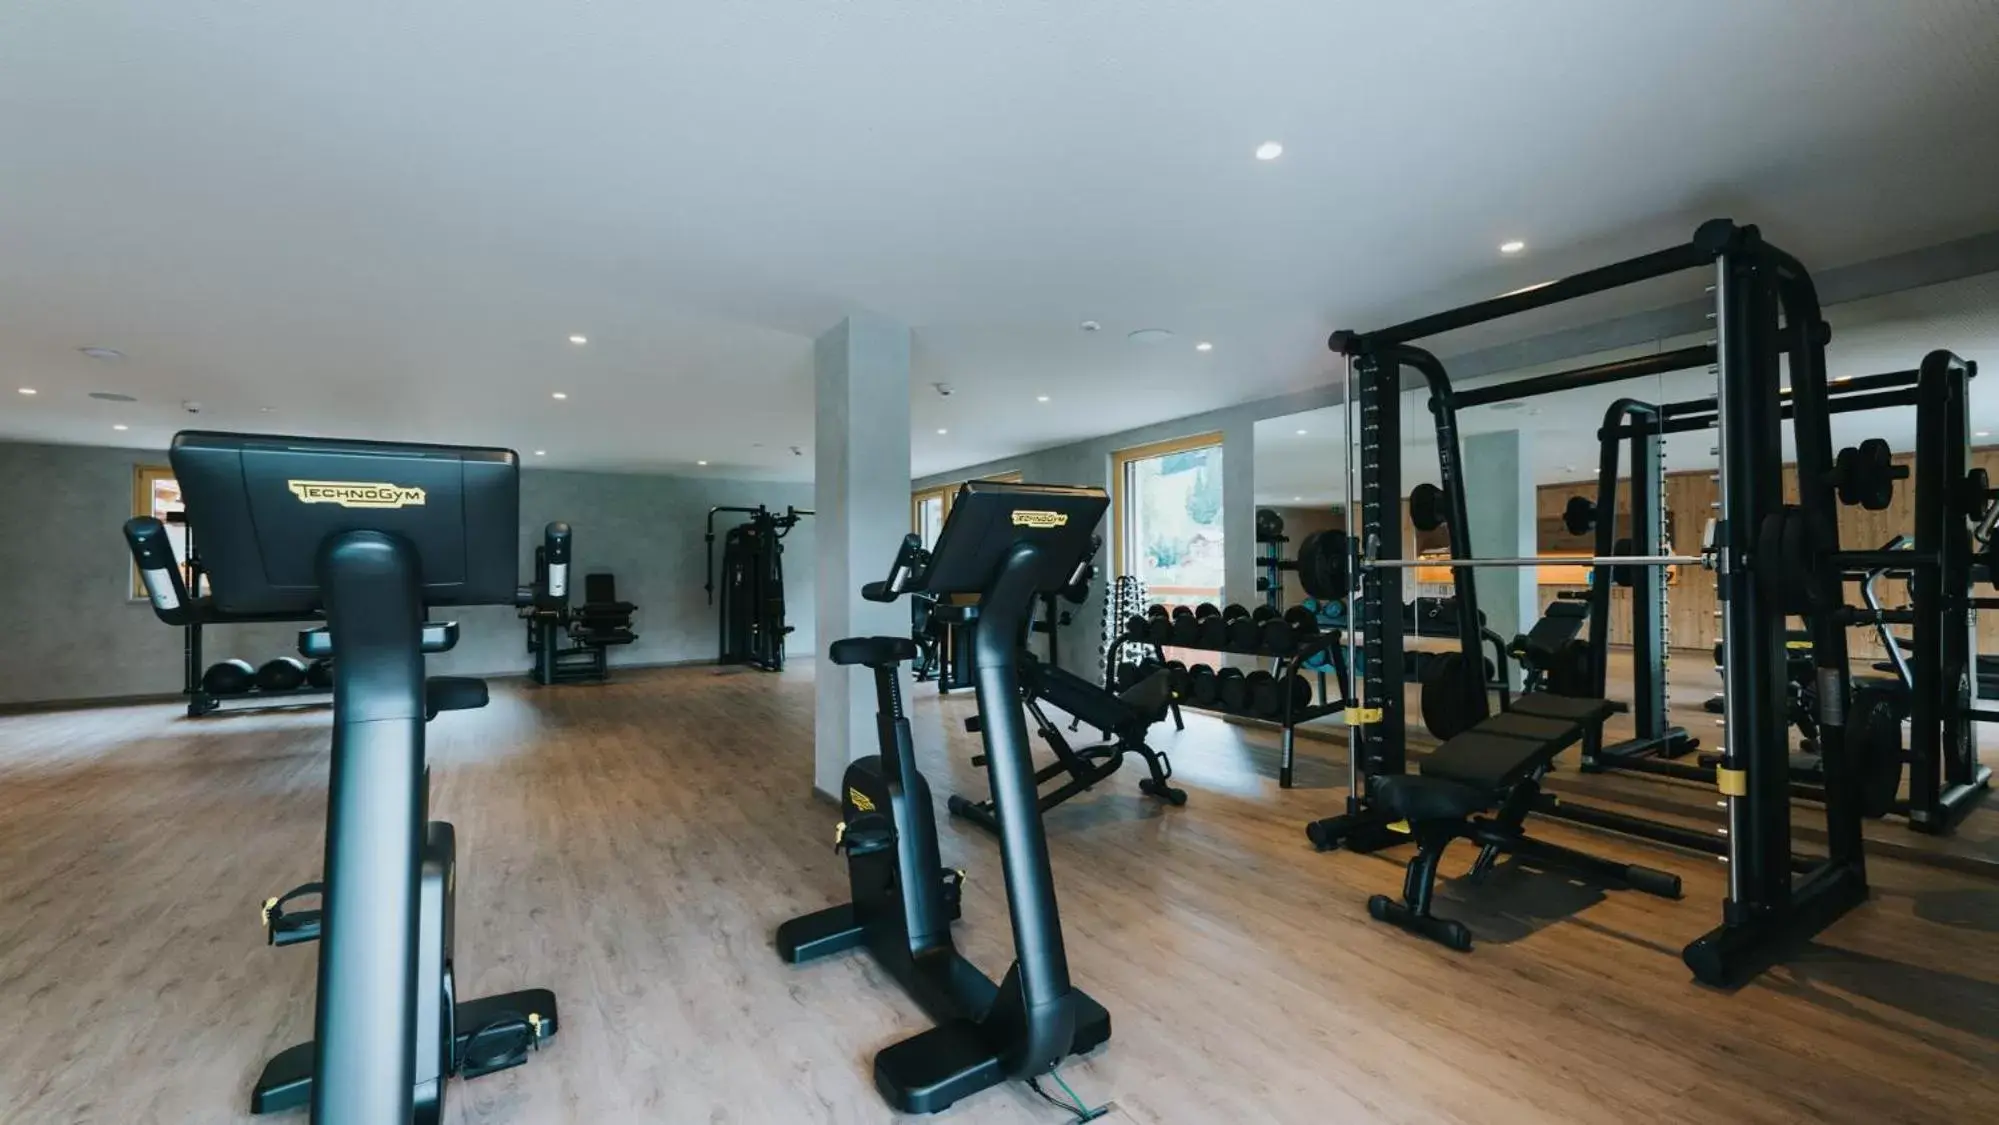 Fitness centre/facilities, Fitness Center/Facilities in Hotel Tauernhof